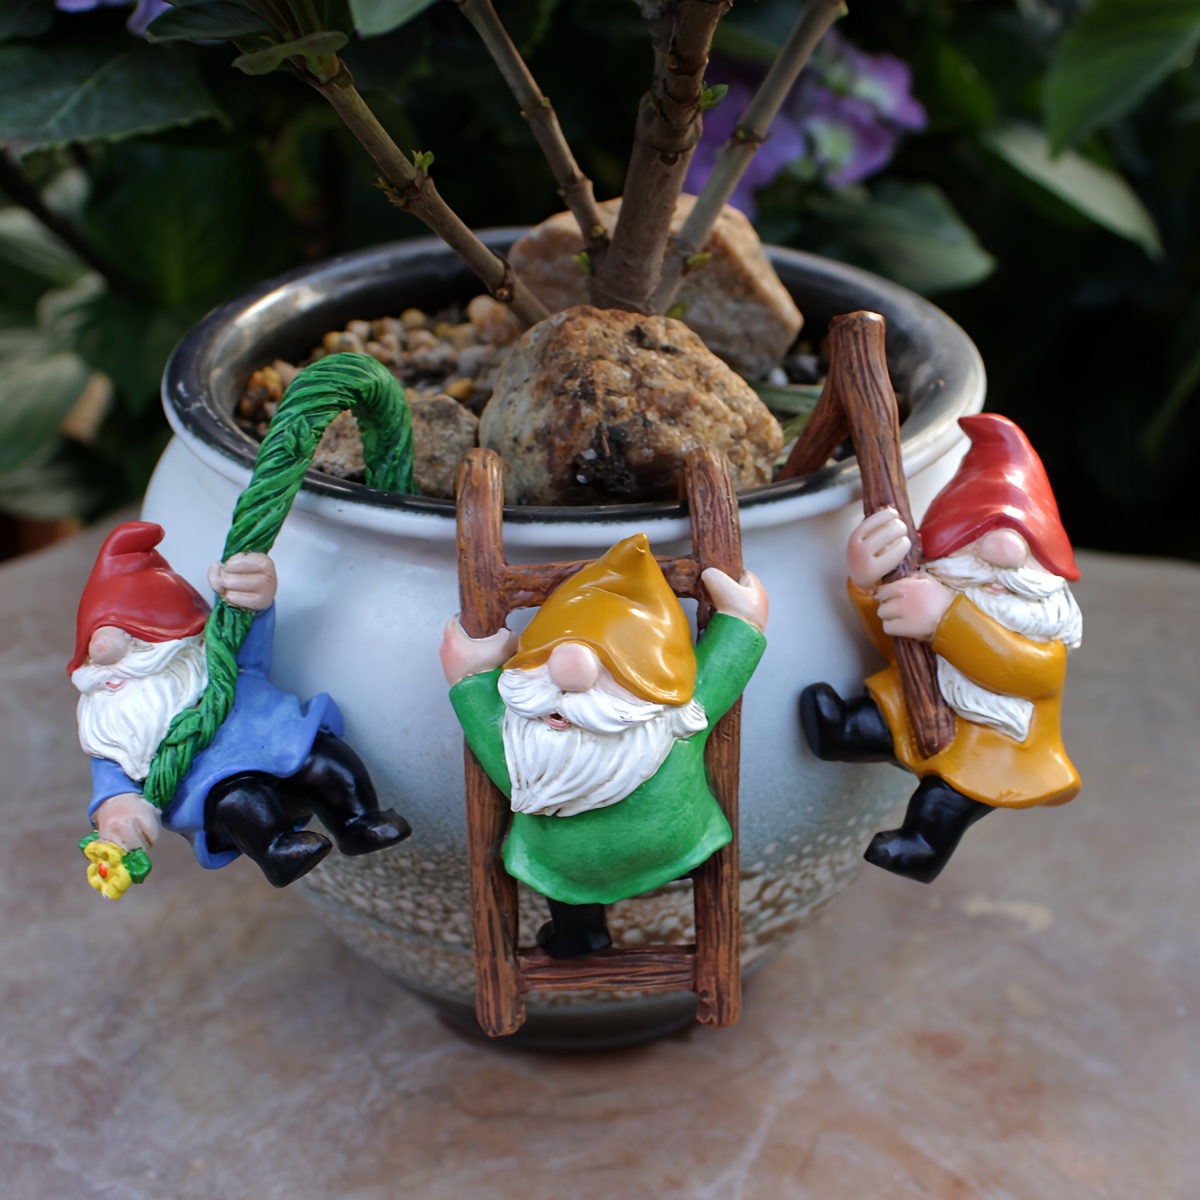 

3pcs Resin Garden Gnomes, Pot Hangers, Outdoor Gnome Statues For Planters, Flower Pot Edge Decor, Lawn Yard Ornaments, Gardening Gift, Artistic Decor